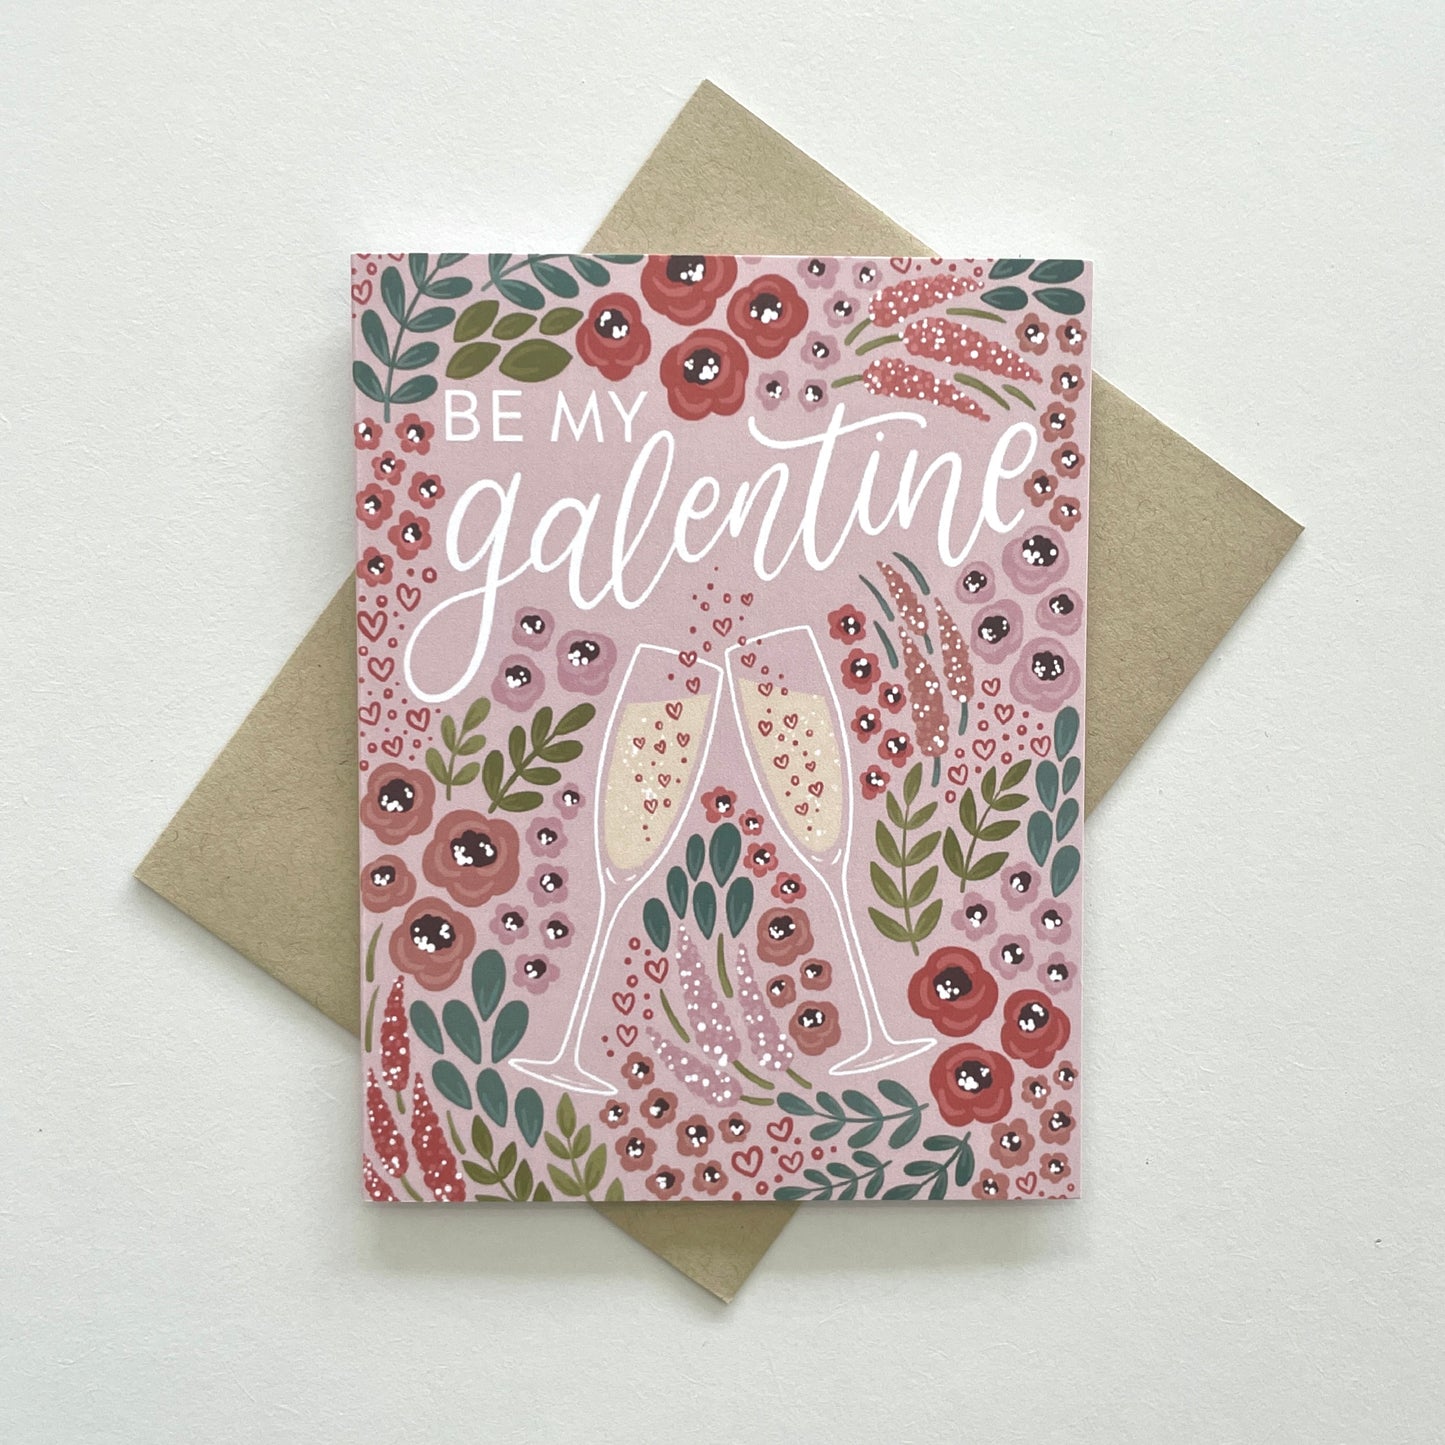 Be My Galentine Card